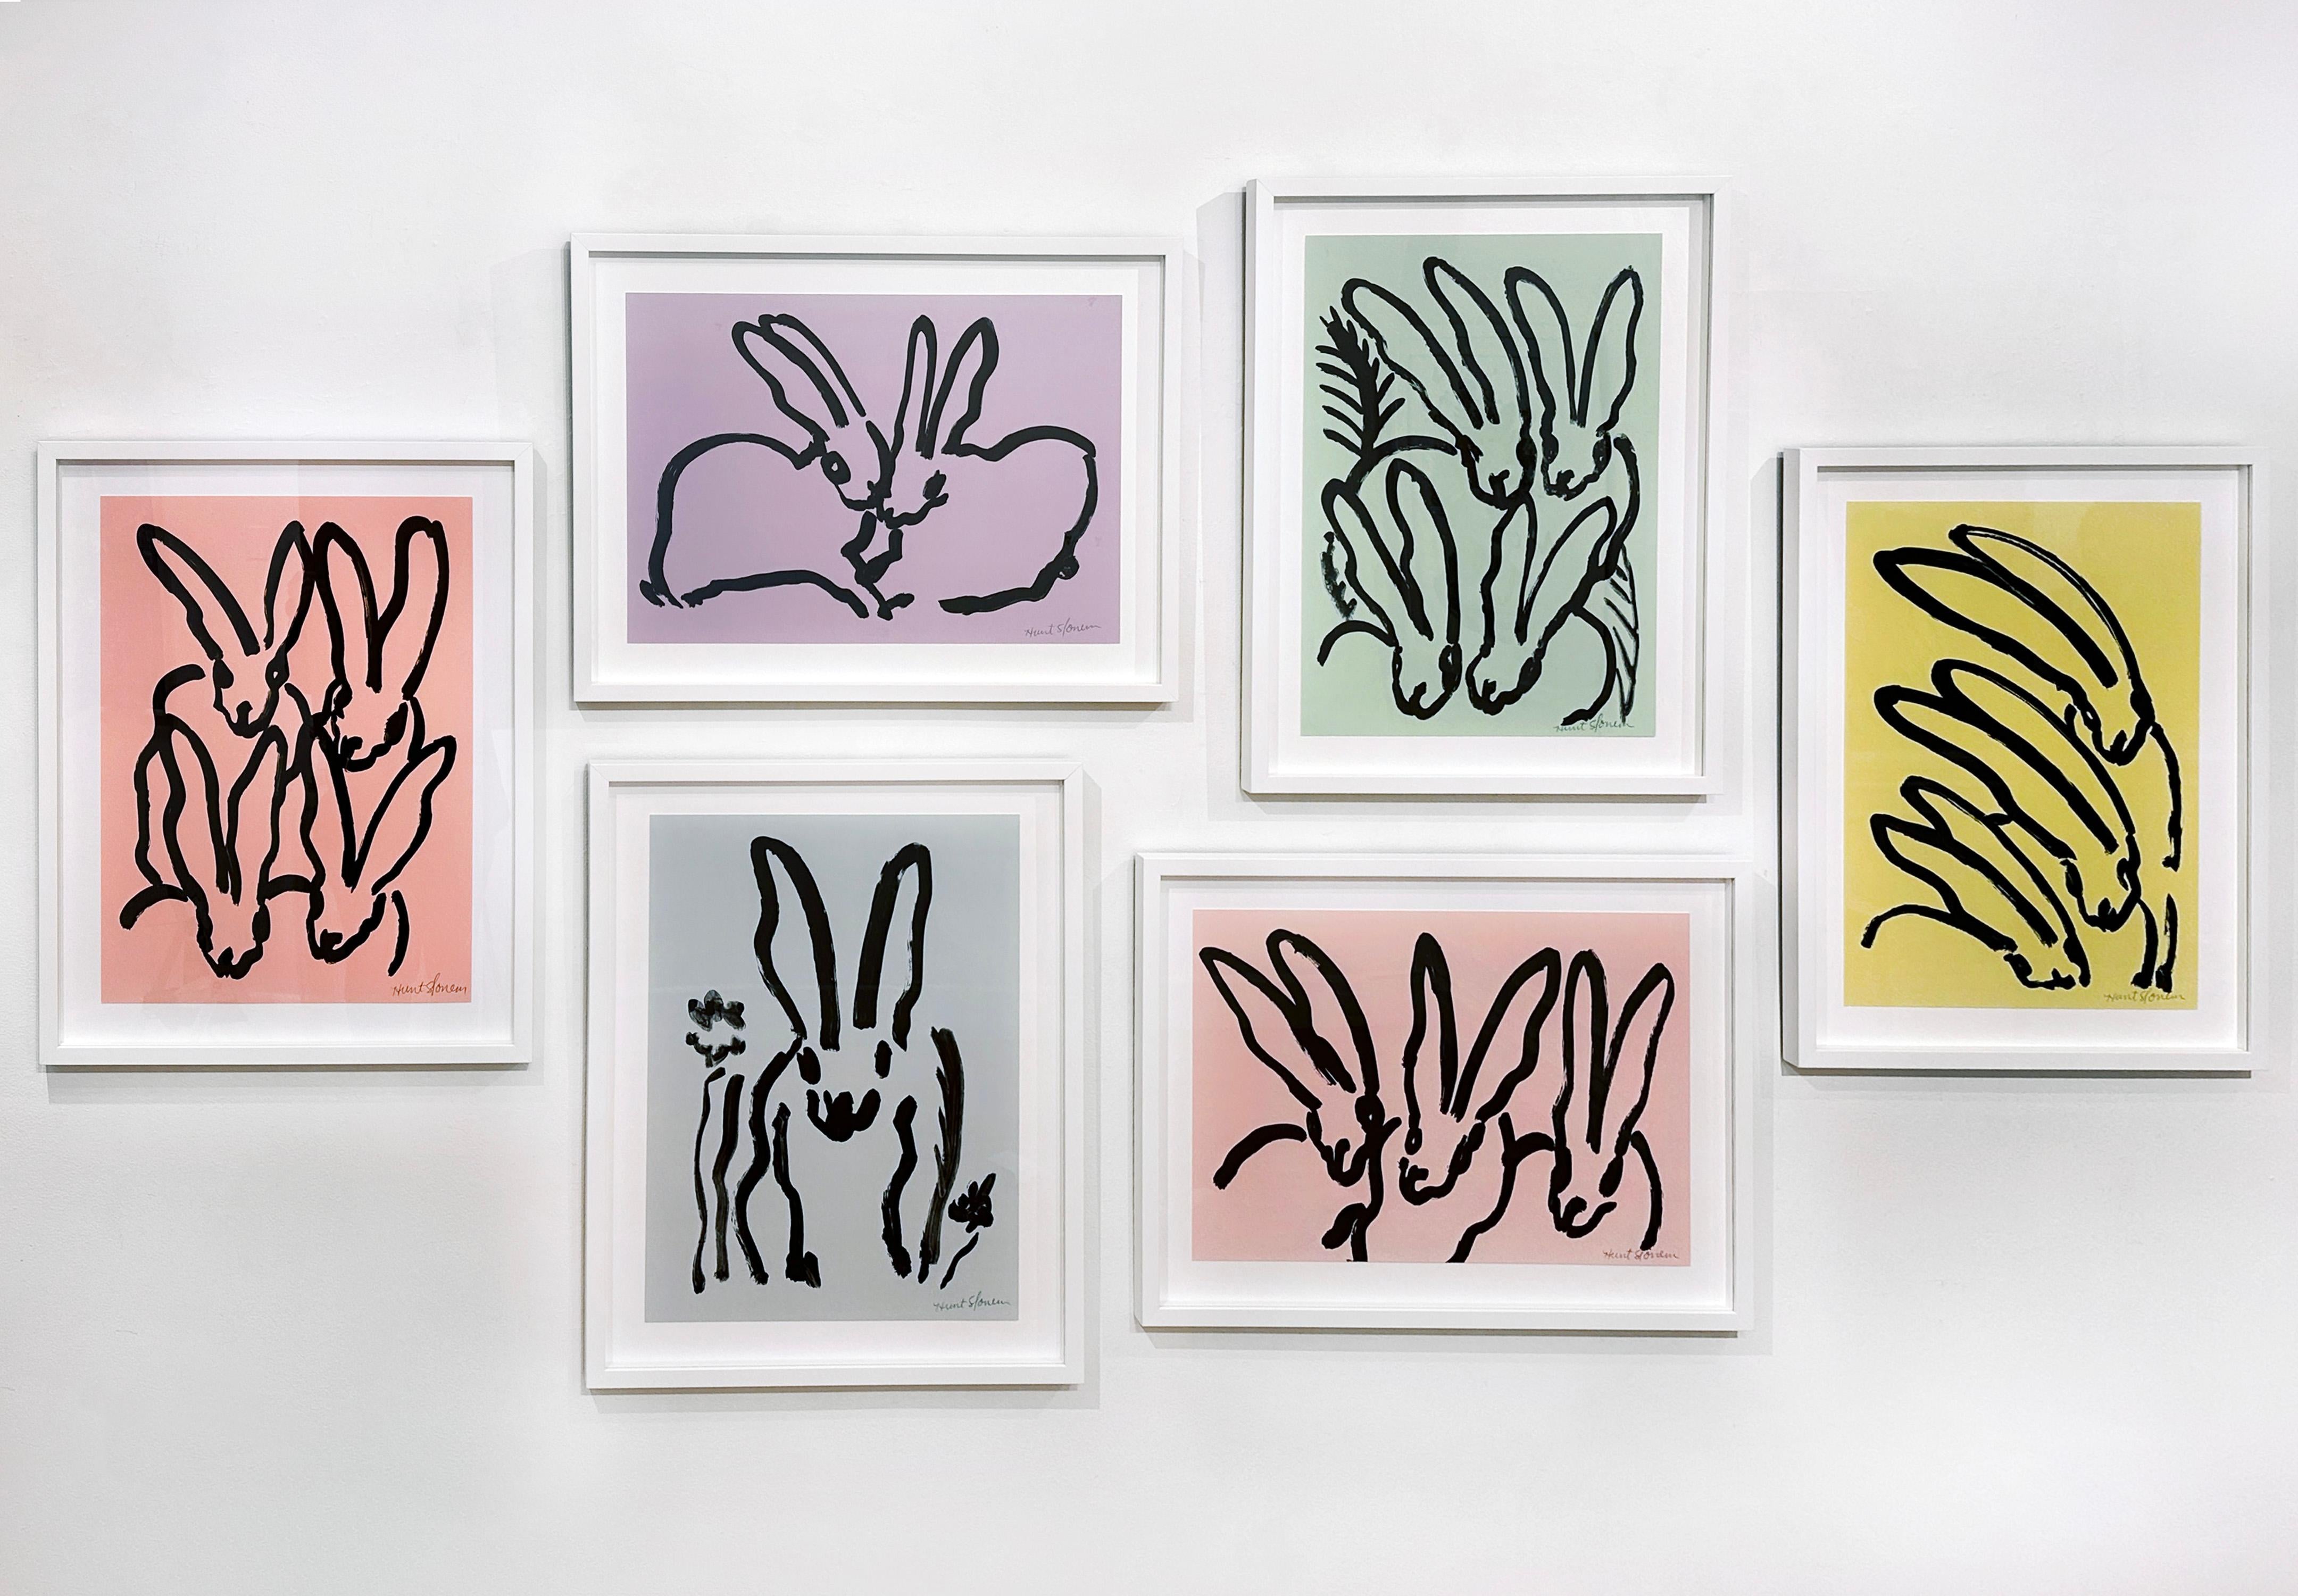 Artist:  Slonem, Hunt
Title:  Cloud Bunny
Series:  Bunnies
Date:  2017
Medium:  Lithograph on Paper
Unframed Dimensions:  24